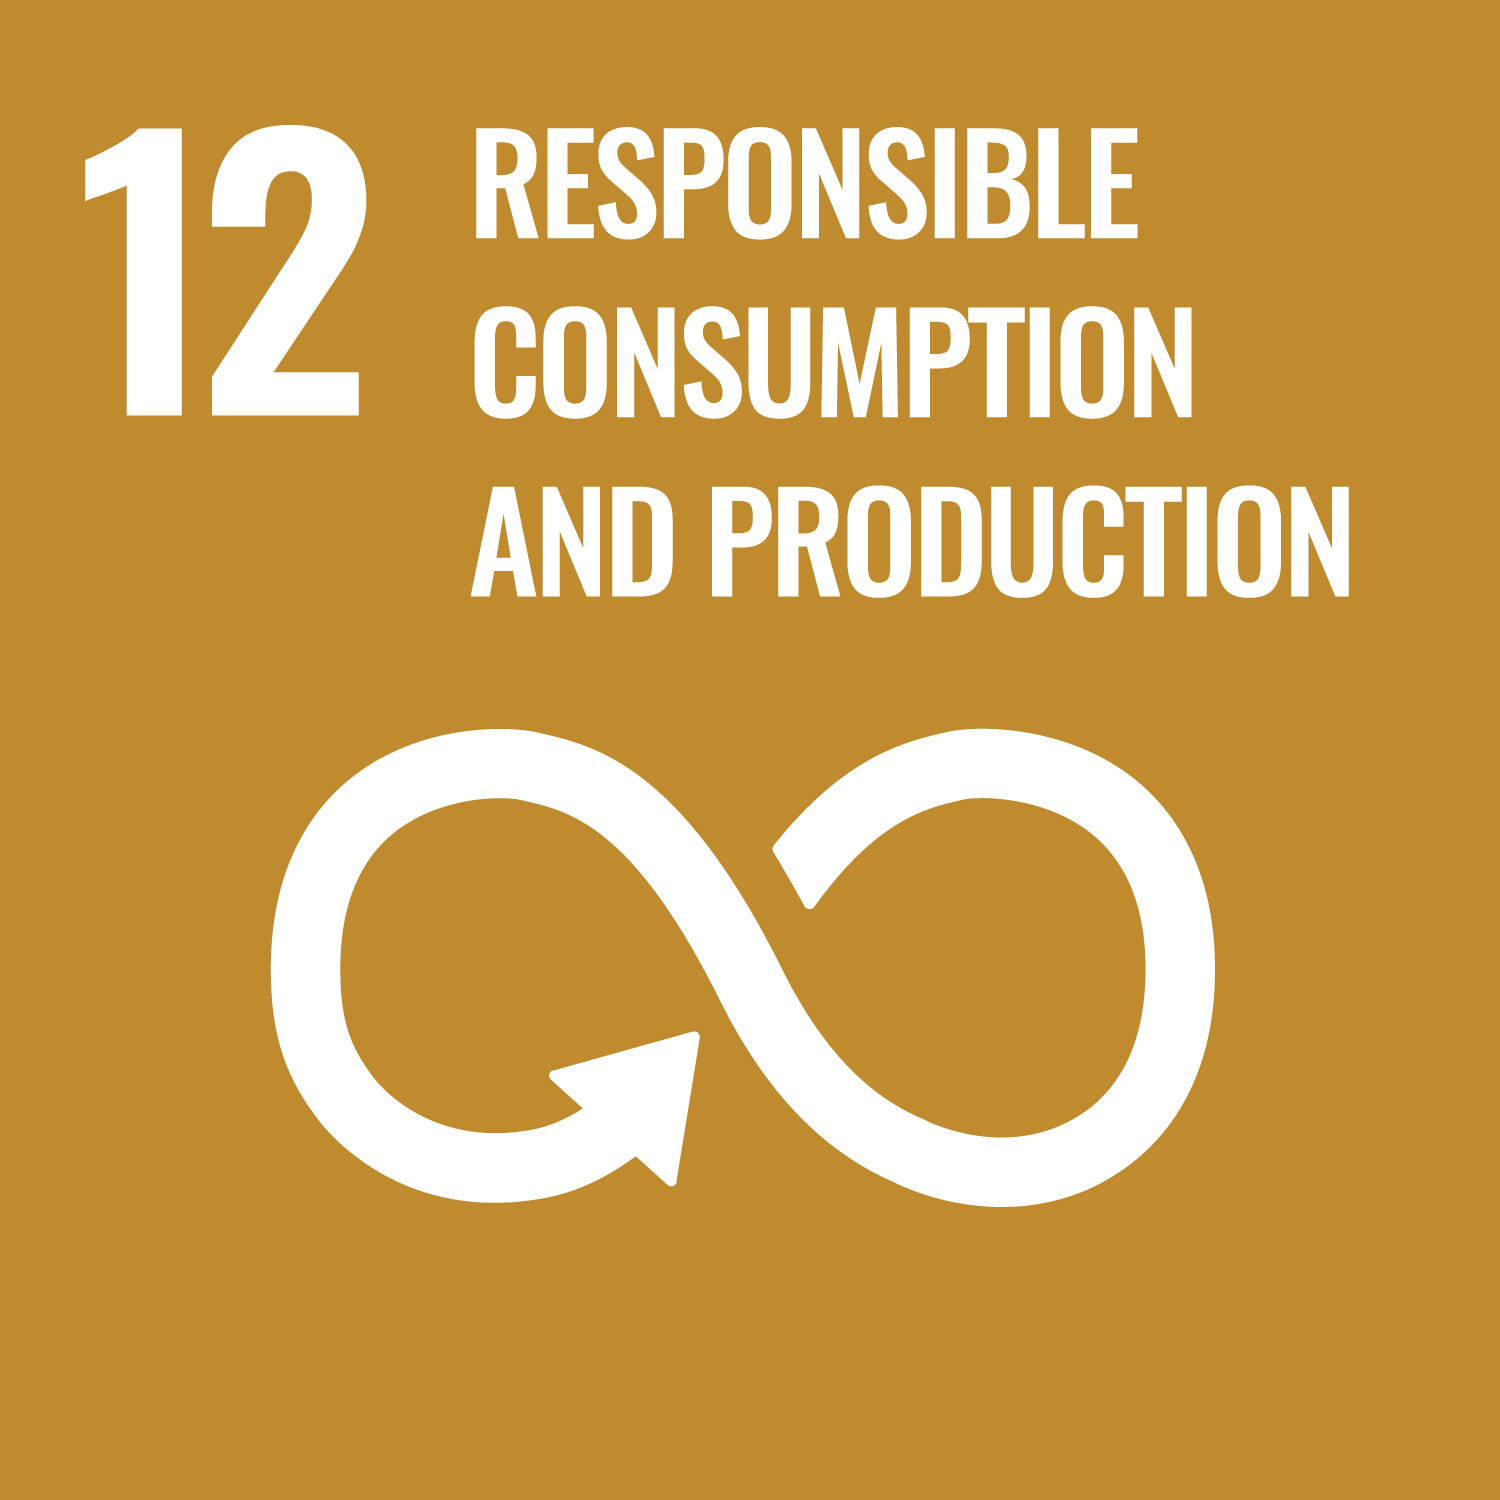 UN Agenda 2030 SDG 12 Responsible consumption and production icon.